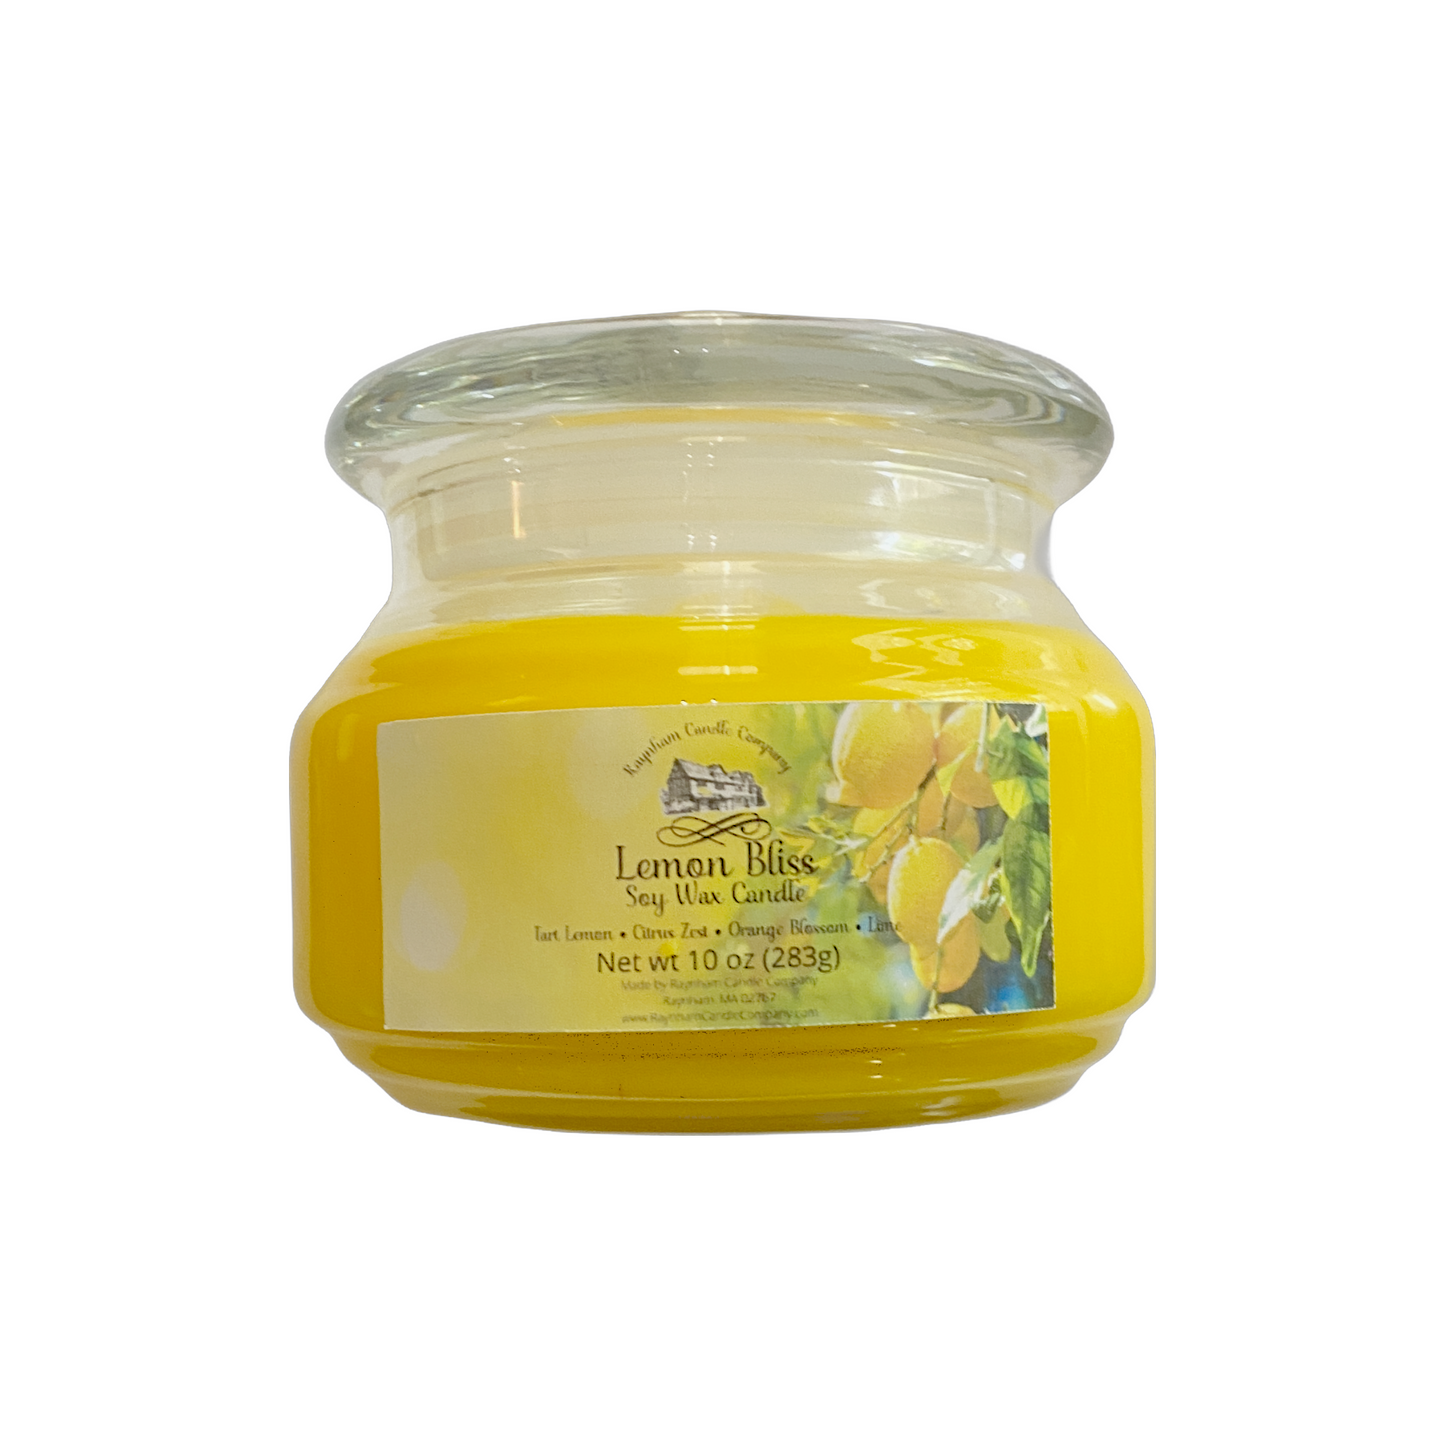 Lemon Bliss - Premium  from Raynham Candle Company  - Just $5.00! Shop now at Raynham Candle Company 